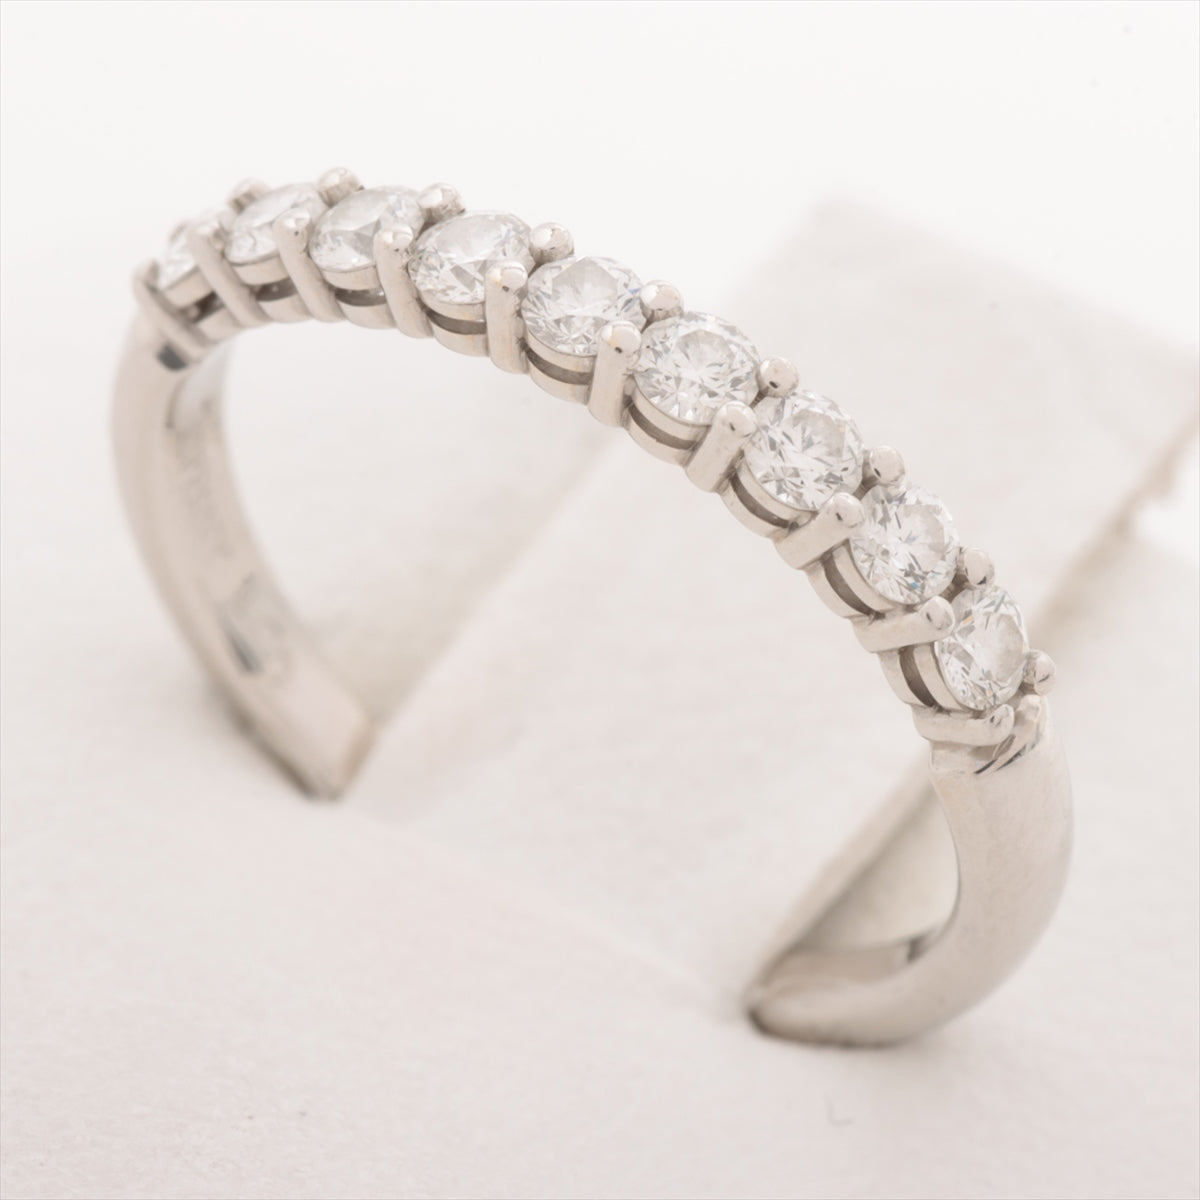 Tiffany Embrace diamond rings Pt950 2.4g